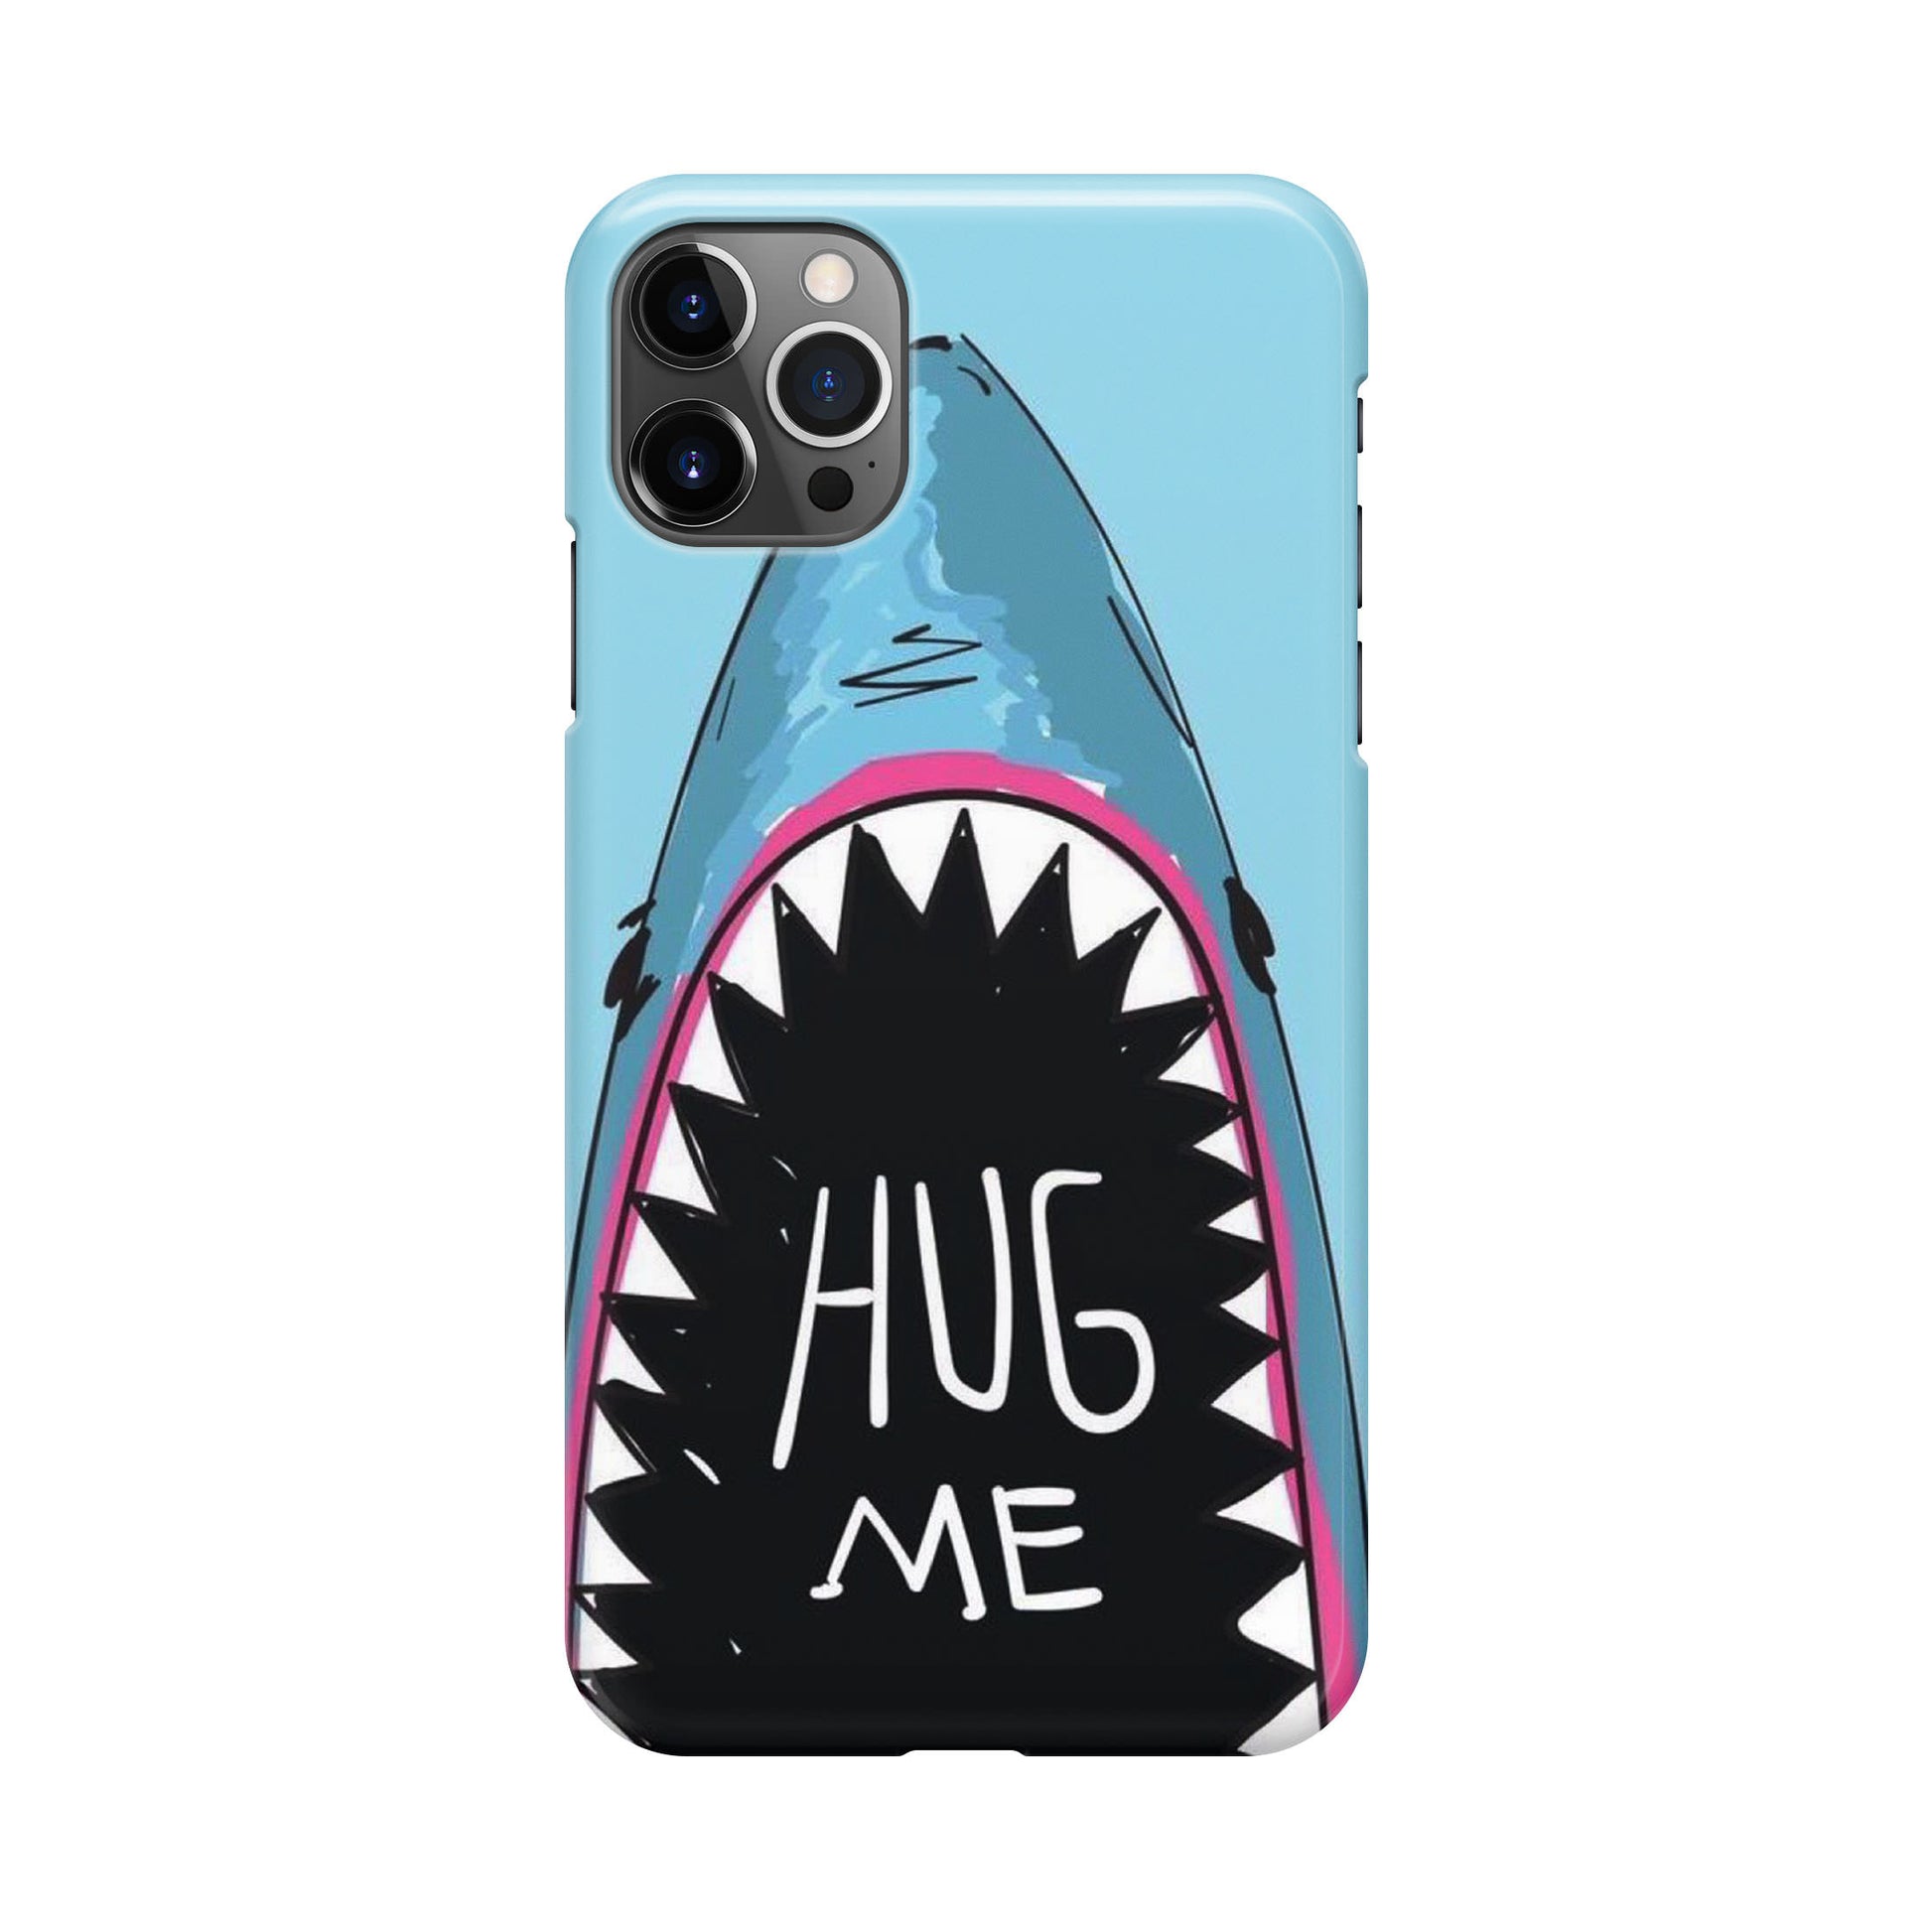 Hug Me iPhone 12 Pro Case